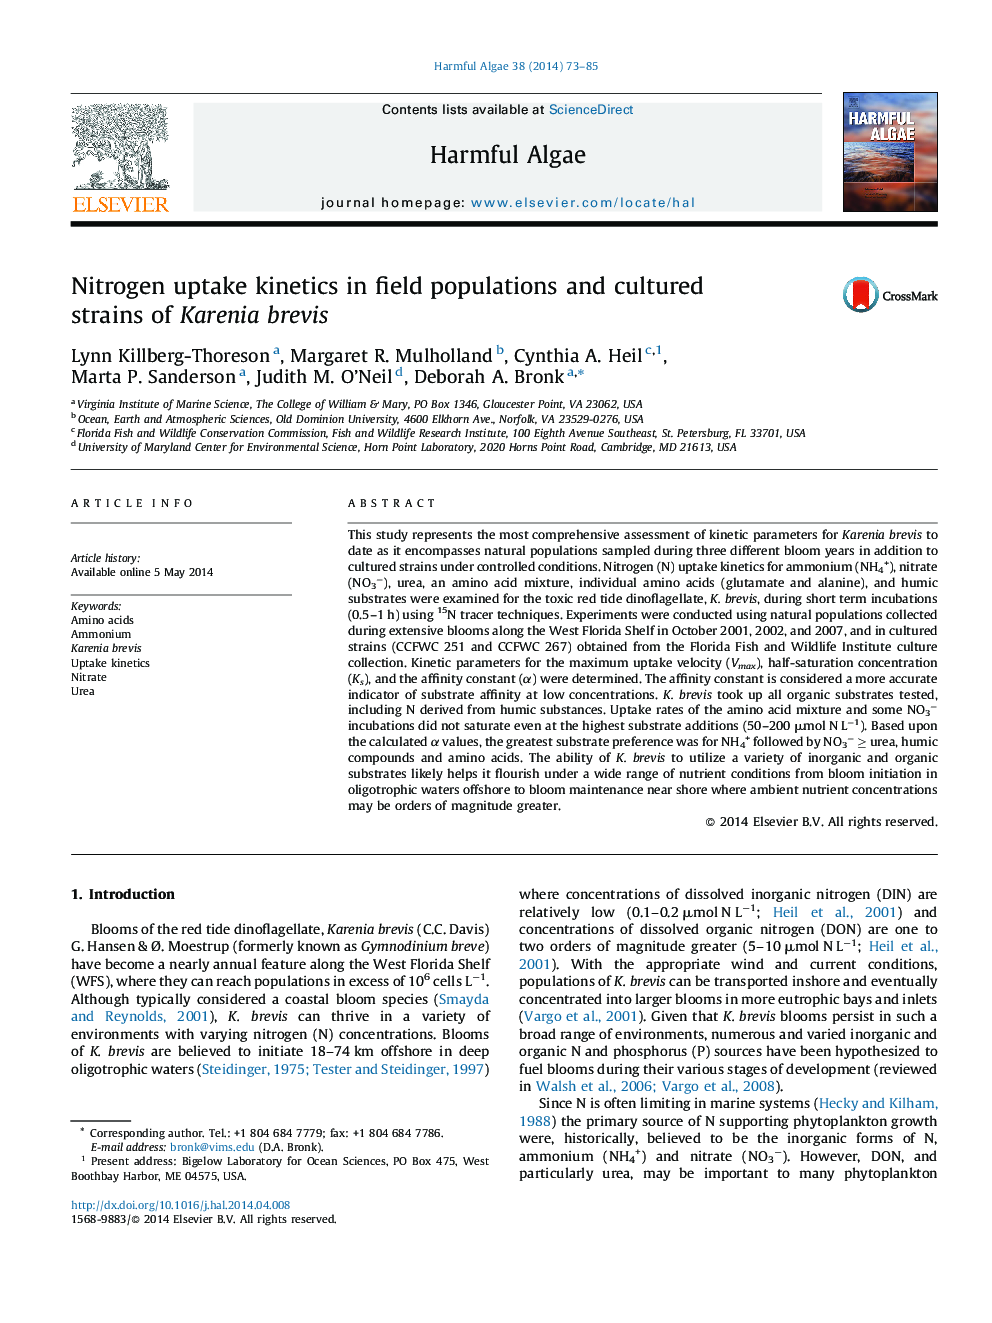 Nitrogen uptake kinetics in field populations and cultured strains of Karenia brevis